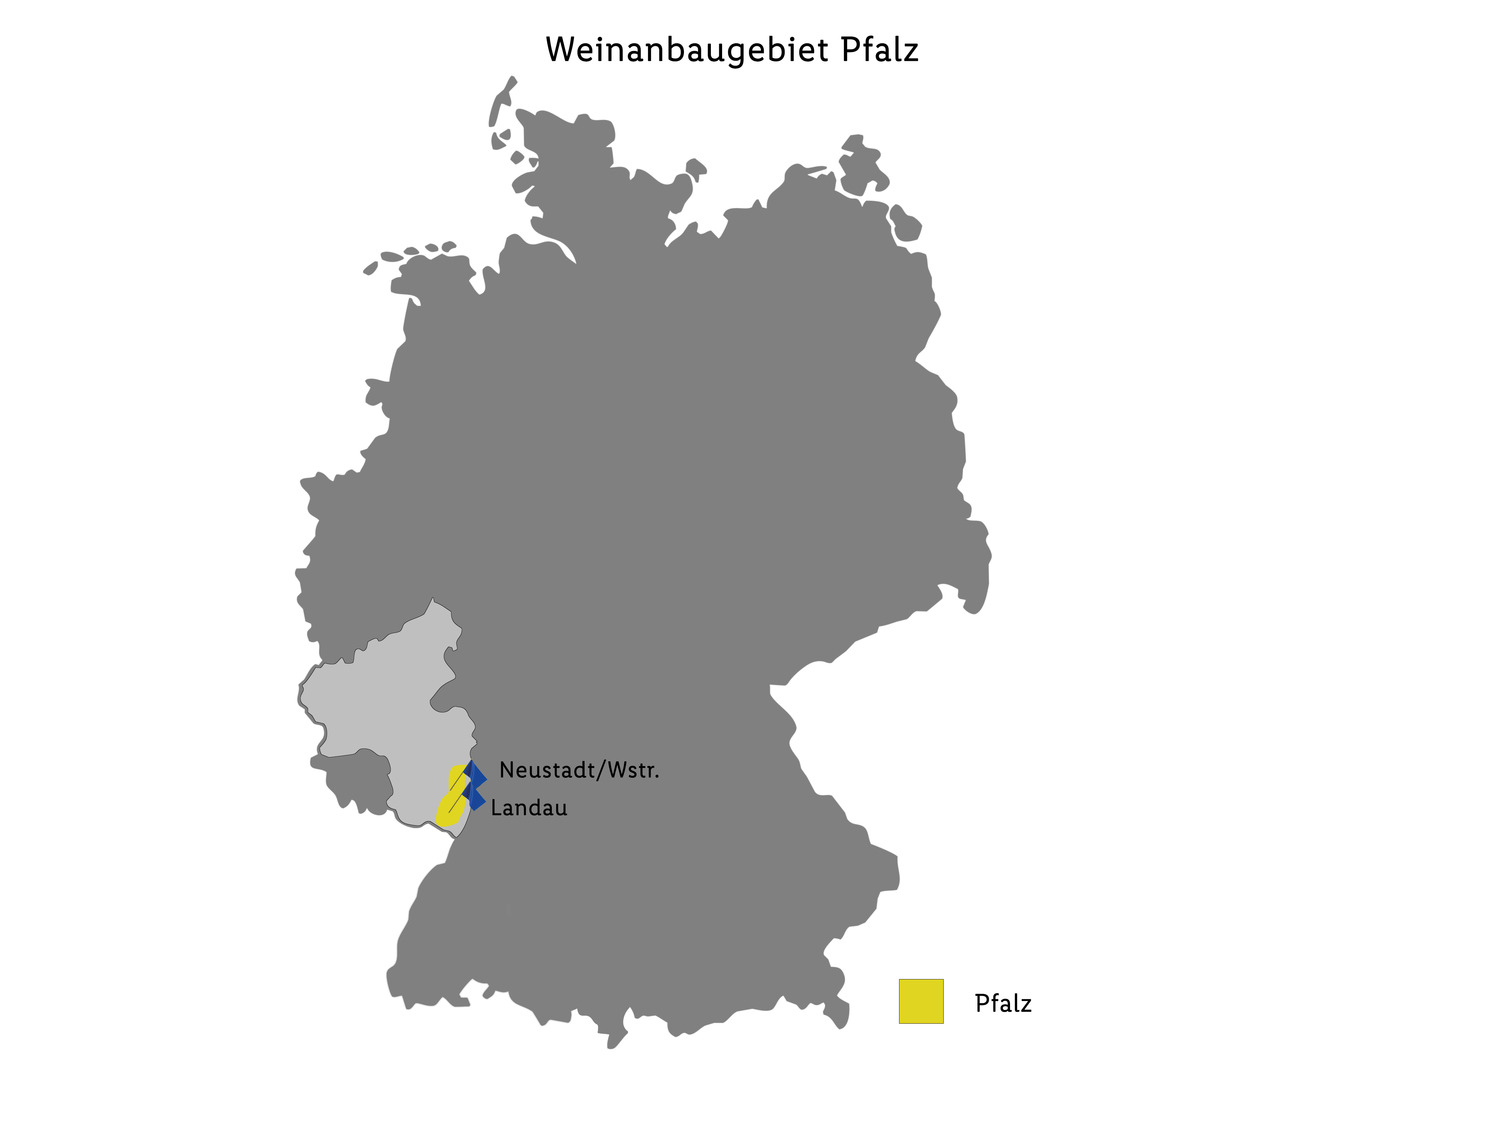 Pfalz QbA… Réserve Weinmanufaktur Deidesheimer Riesling